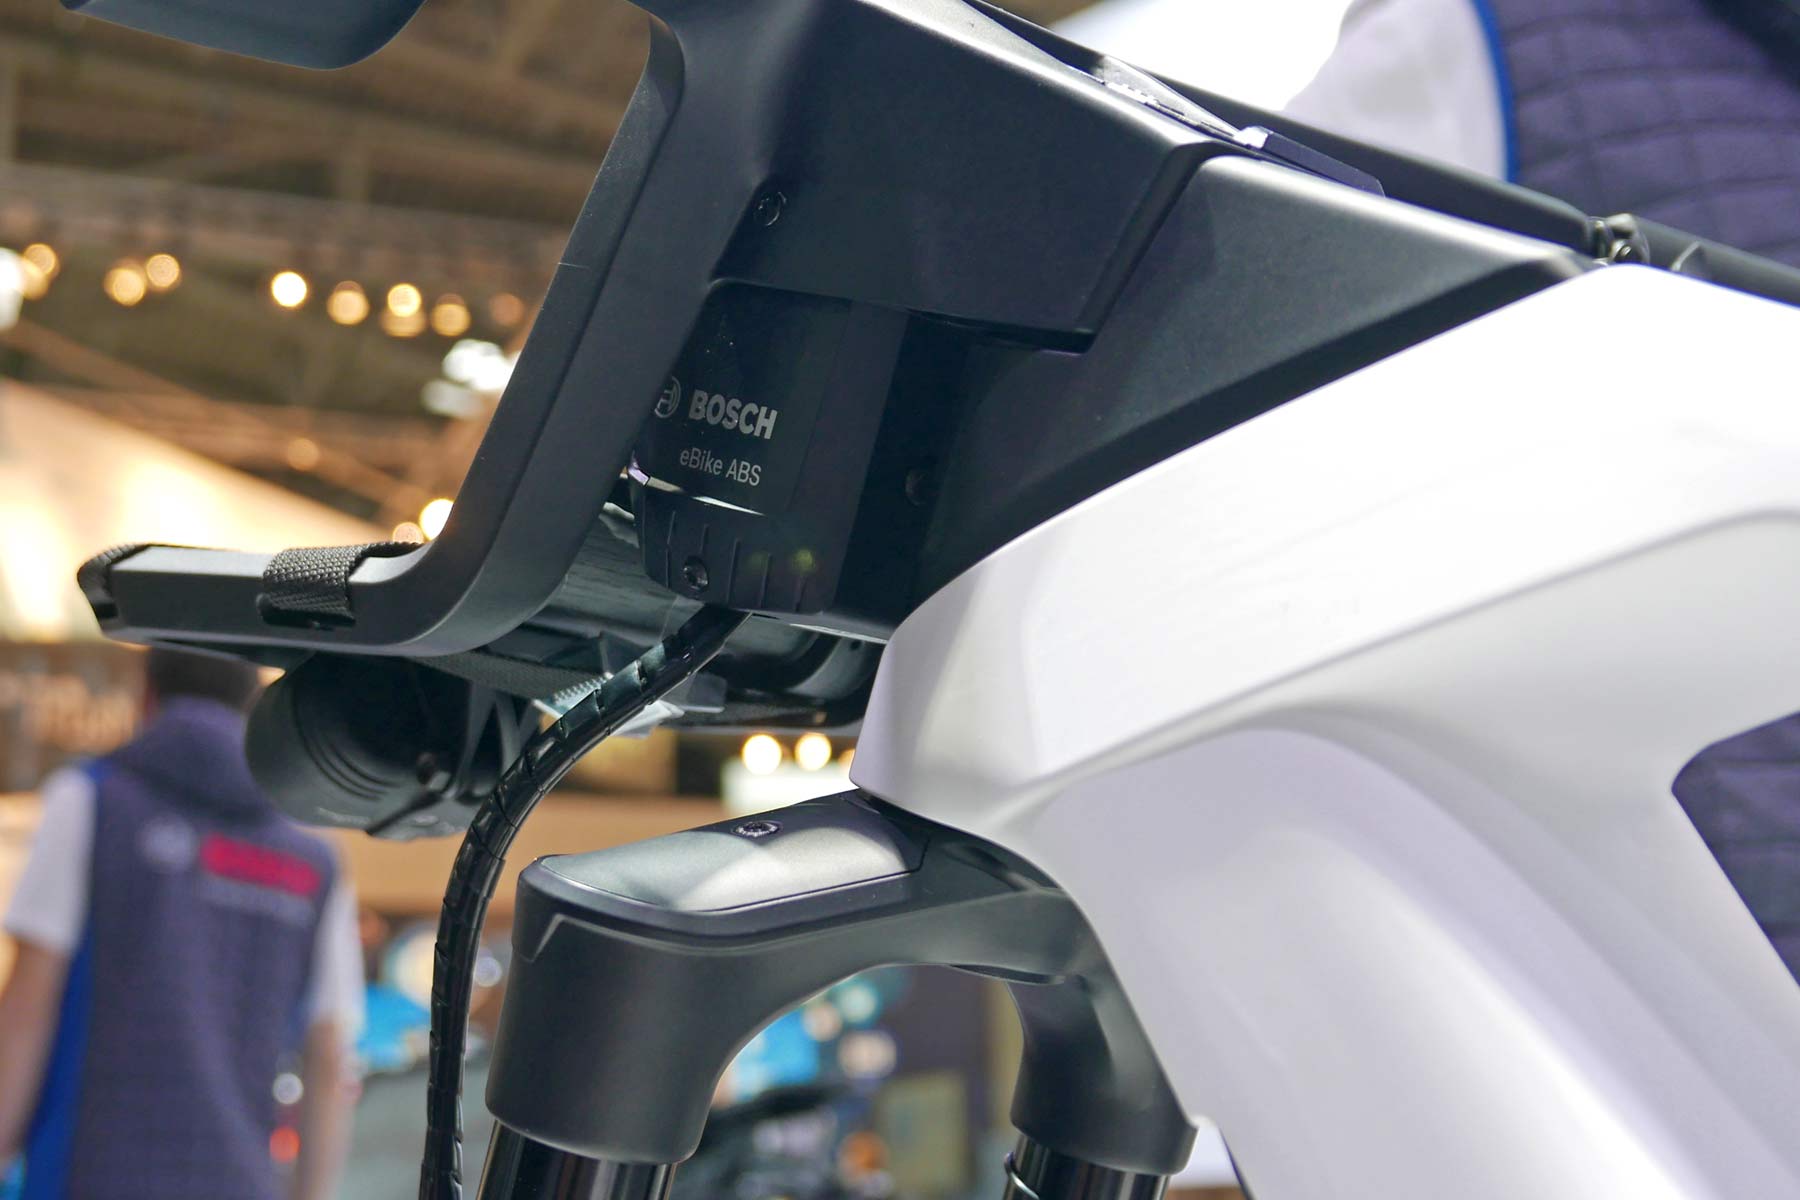 Bosch eBike ABS prototype e-bike with integrated anti-lock braking, on-board computer controller